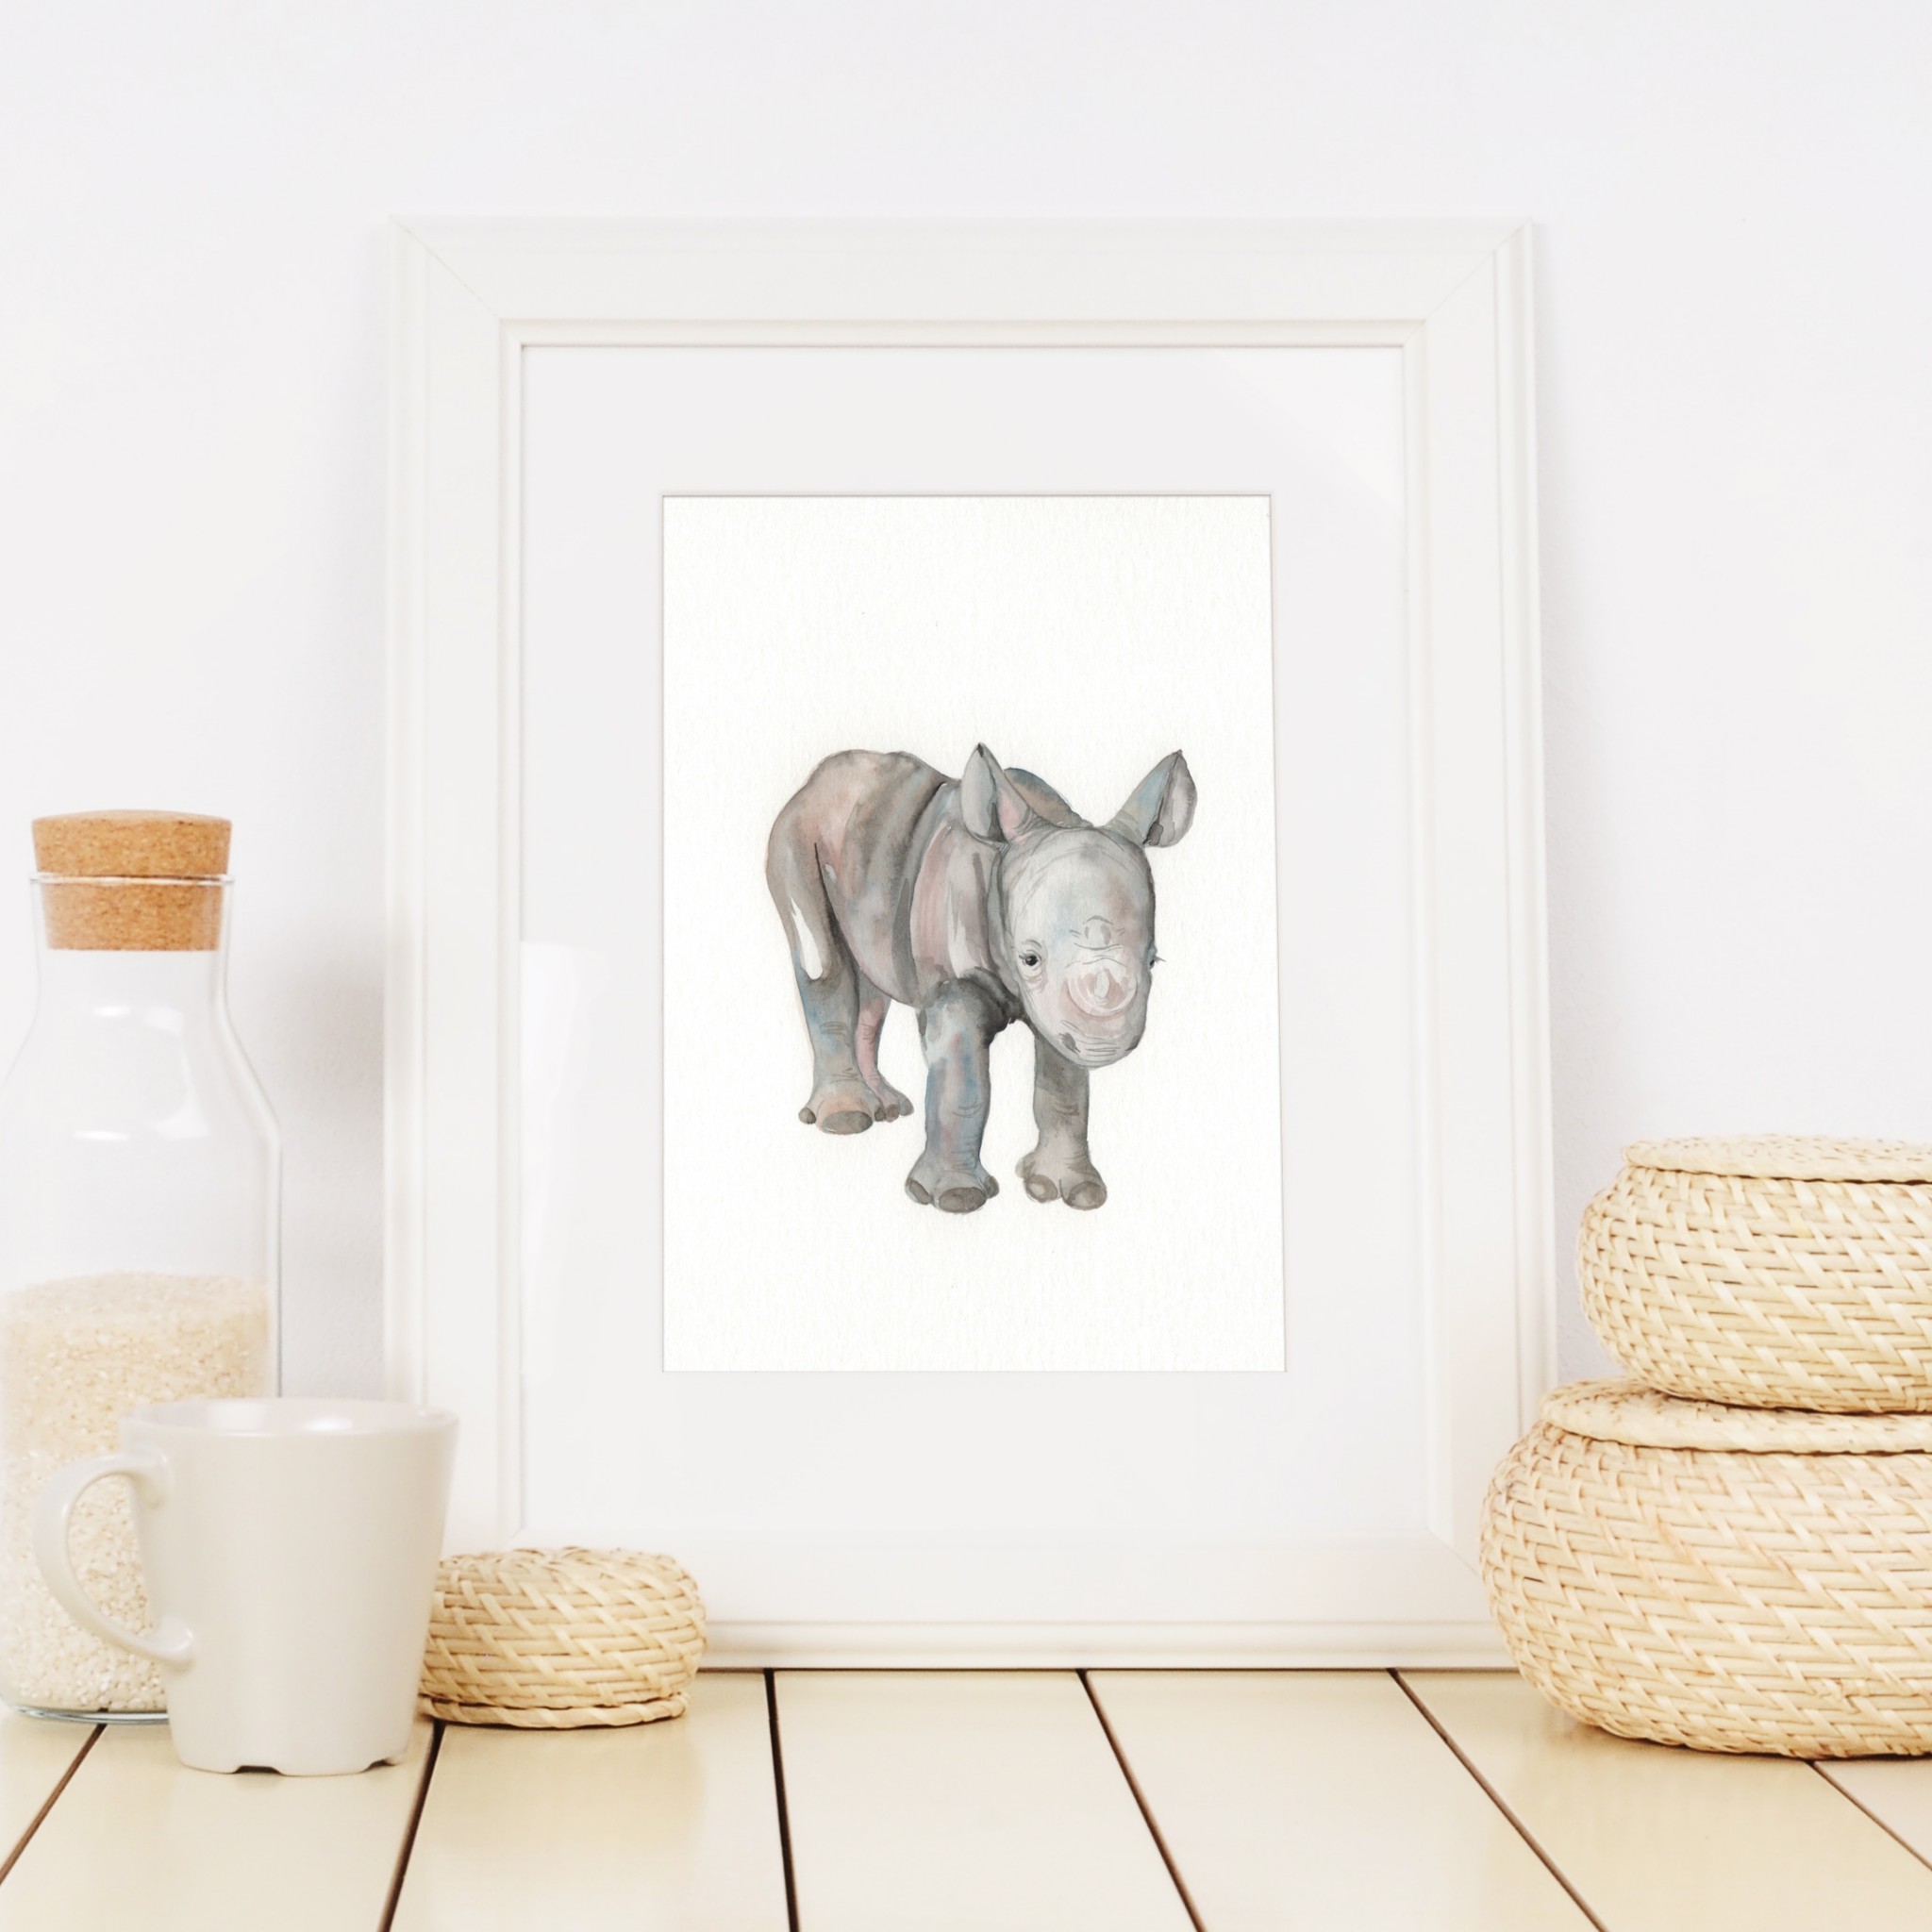 watercolour safari prints, nursery safari prints, nursery wildlife prints, wildlife art work, rhino print, safari decor,